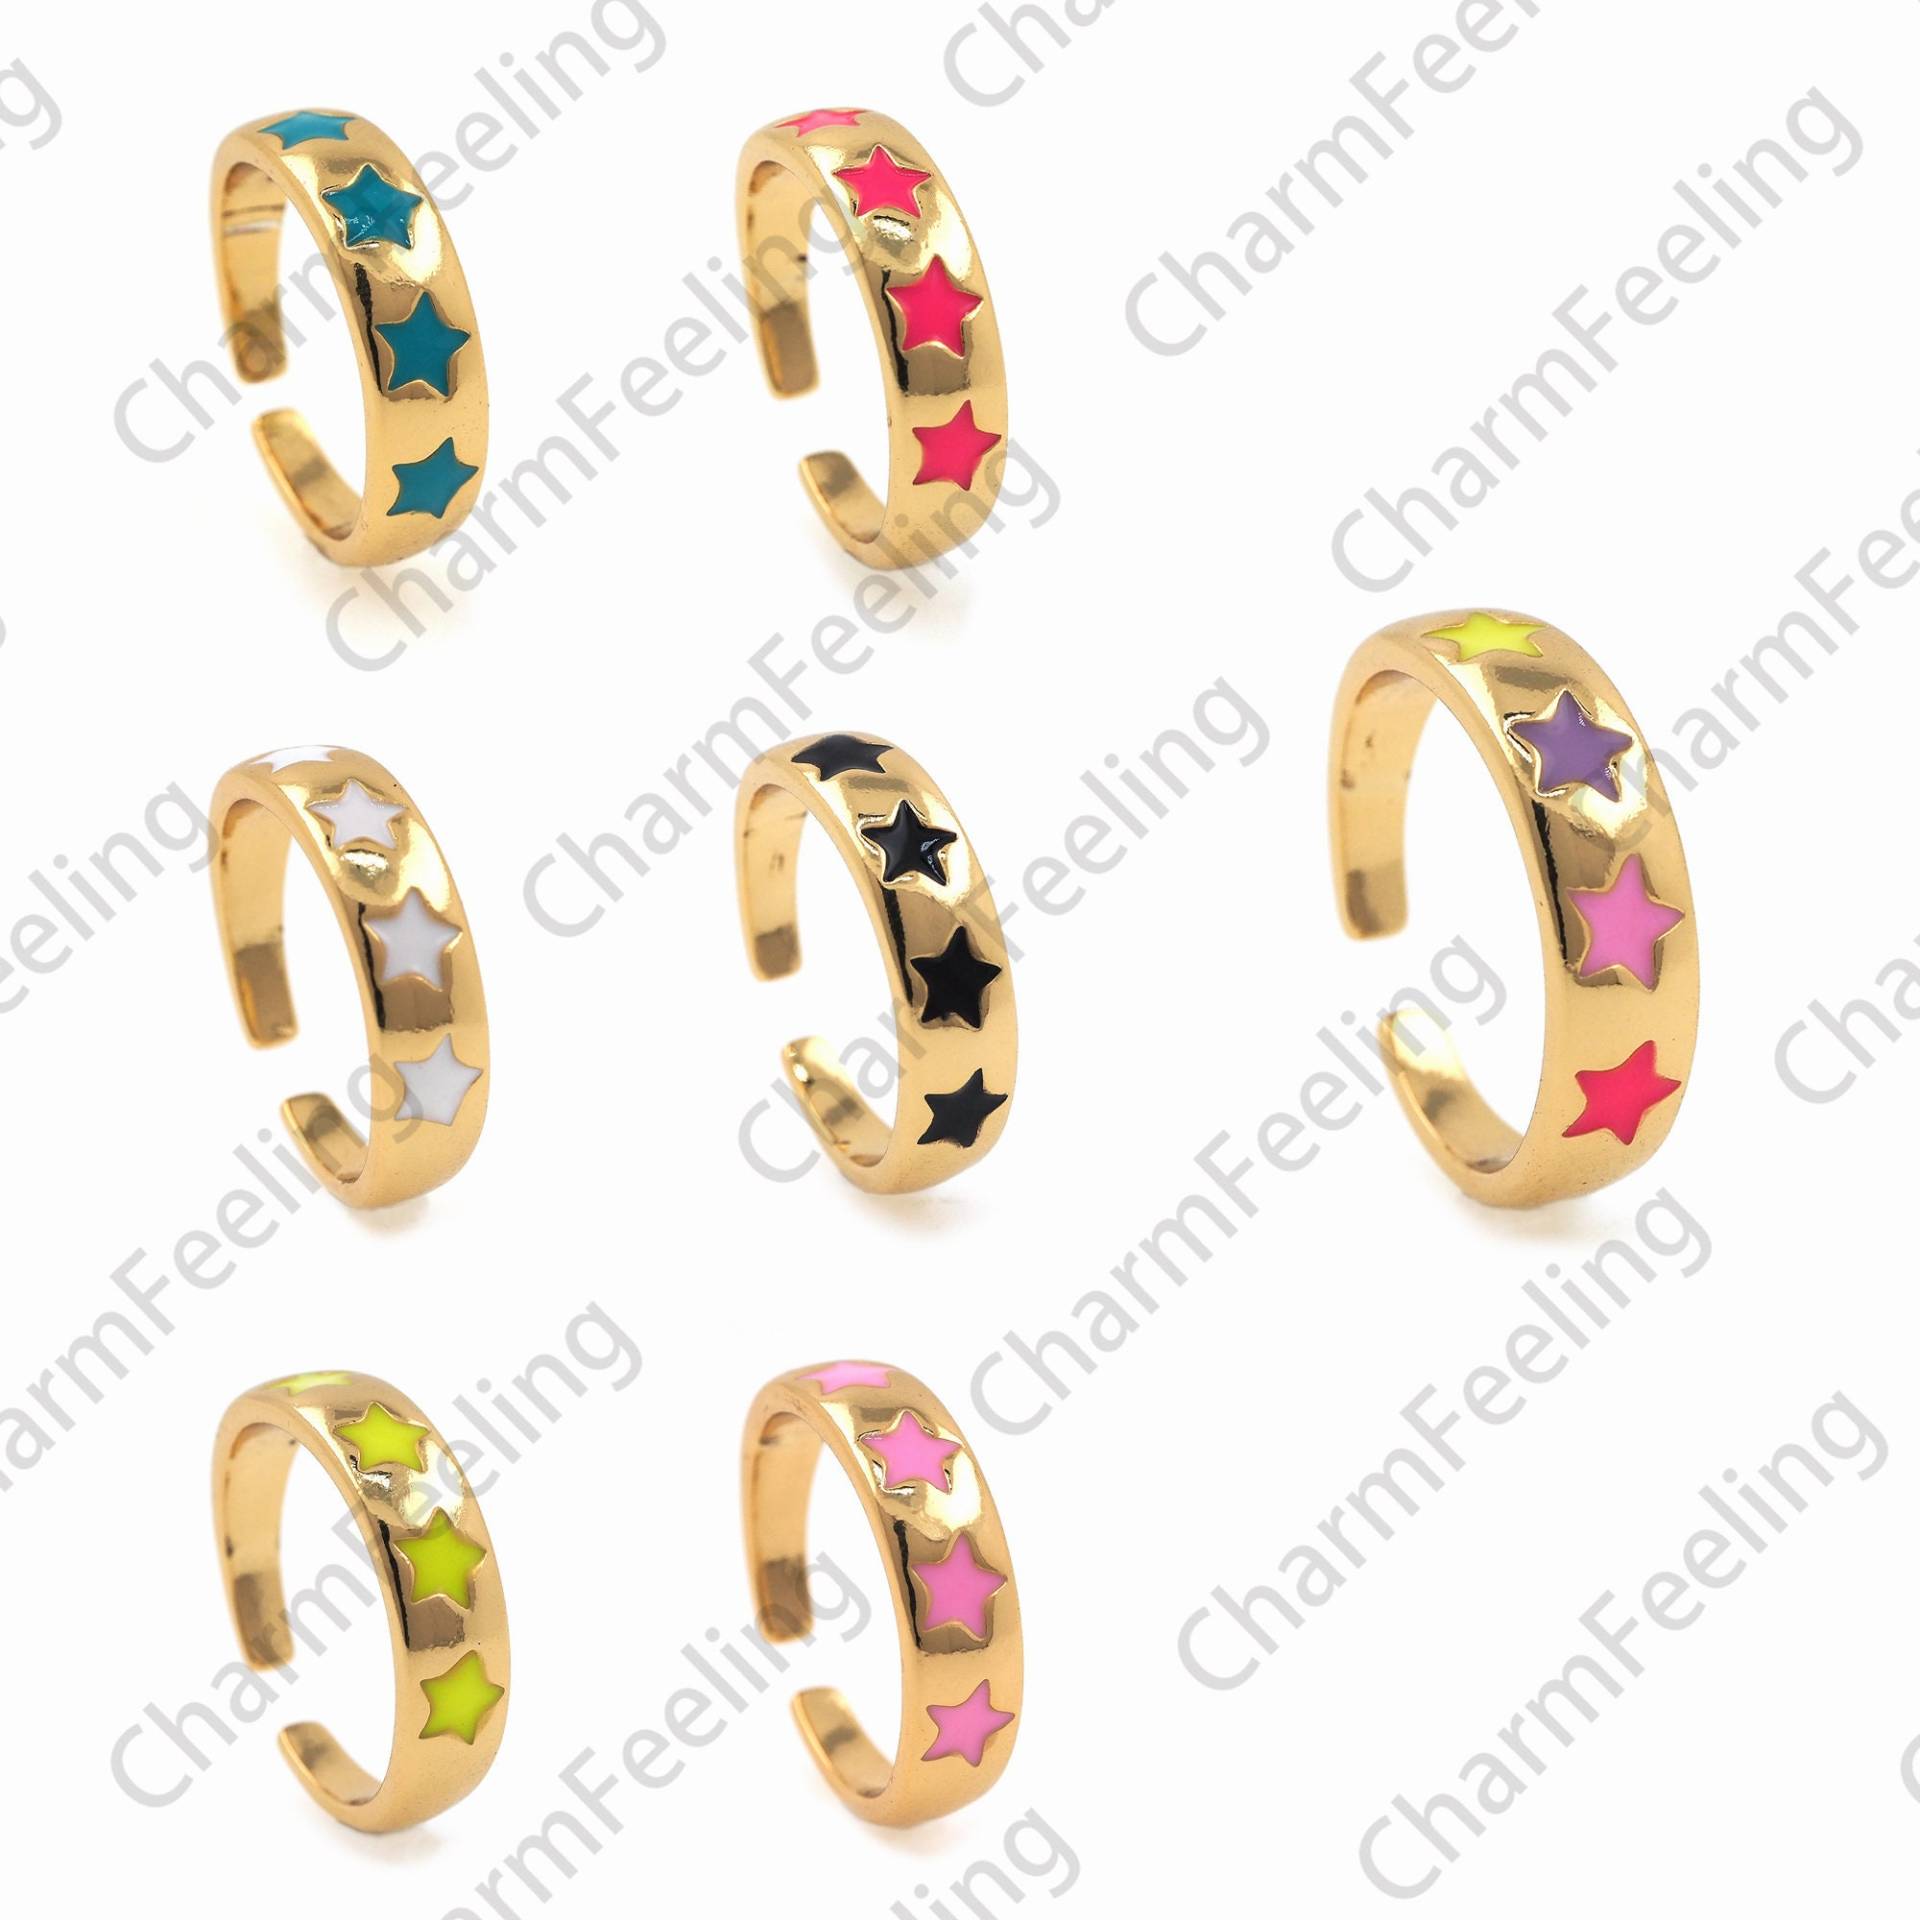 18K Gold Filled Emaille Stern Ring, Schmuck, Offener Verstellbarer Ring von CharmFeeling